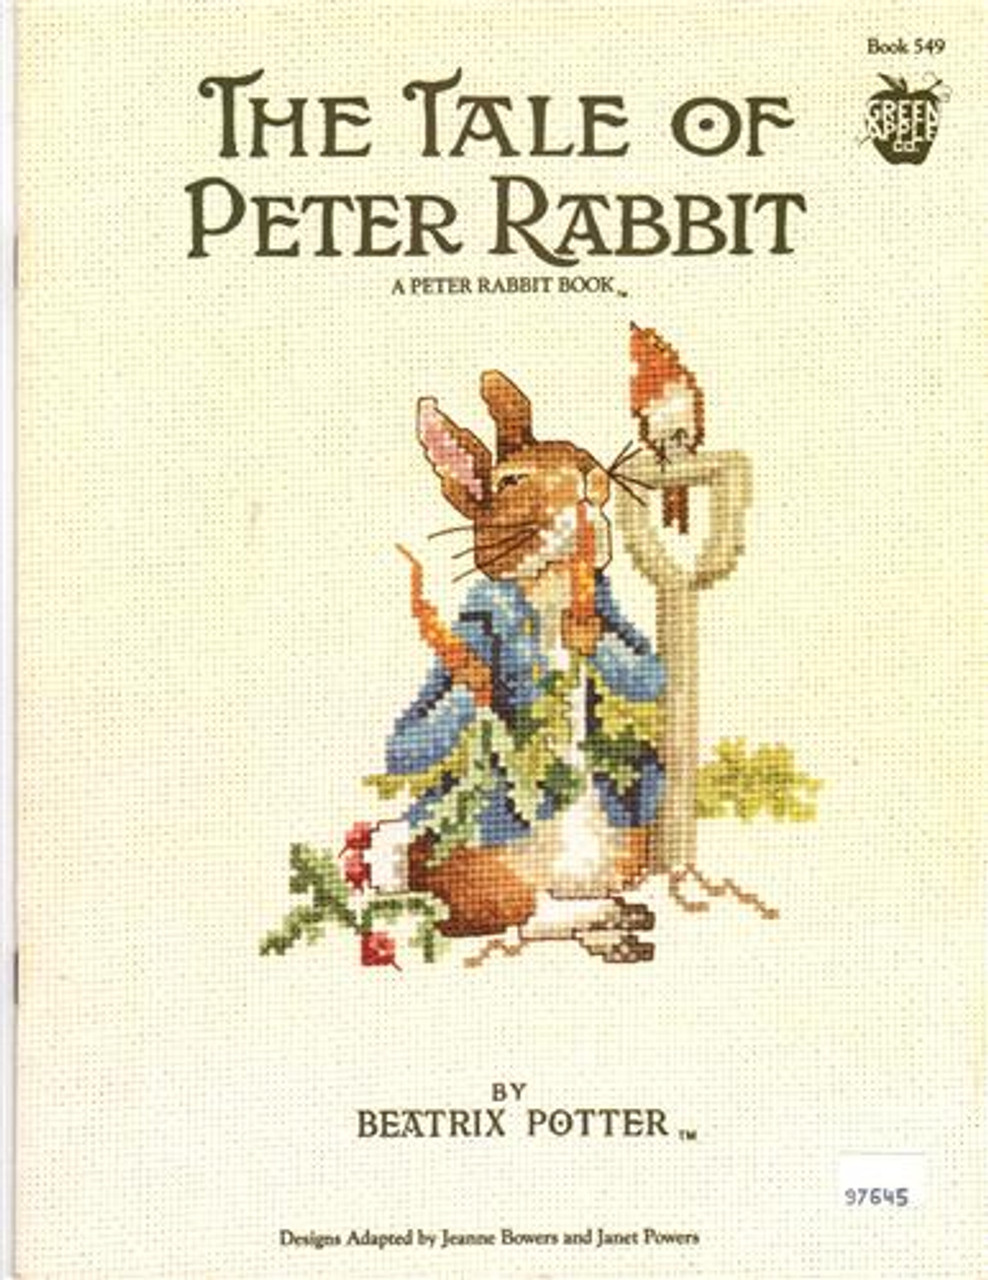 The Beatrix Potter Needlepoint Book